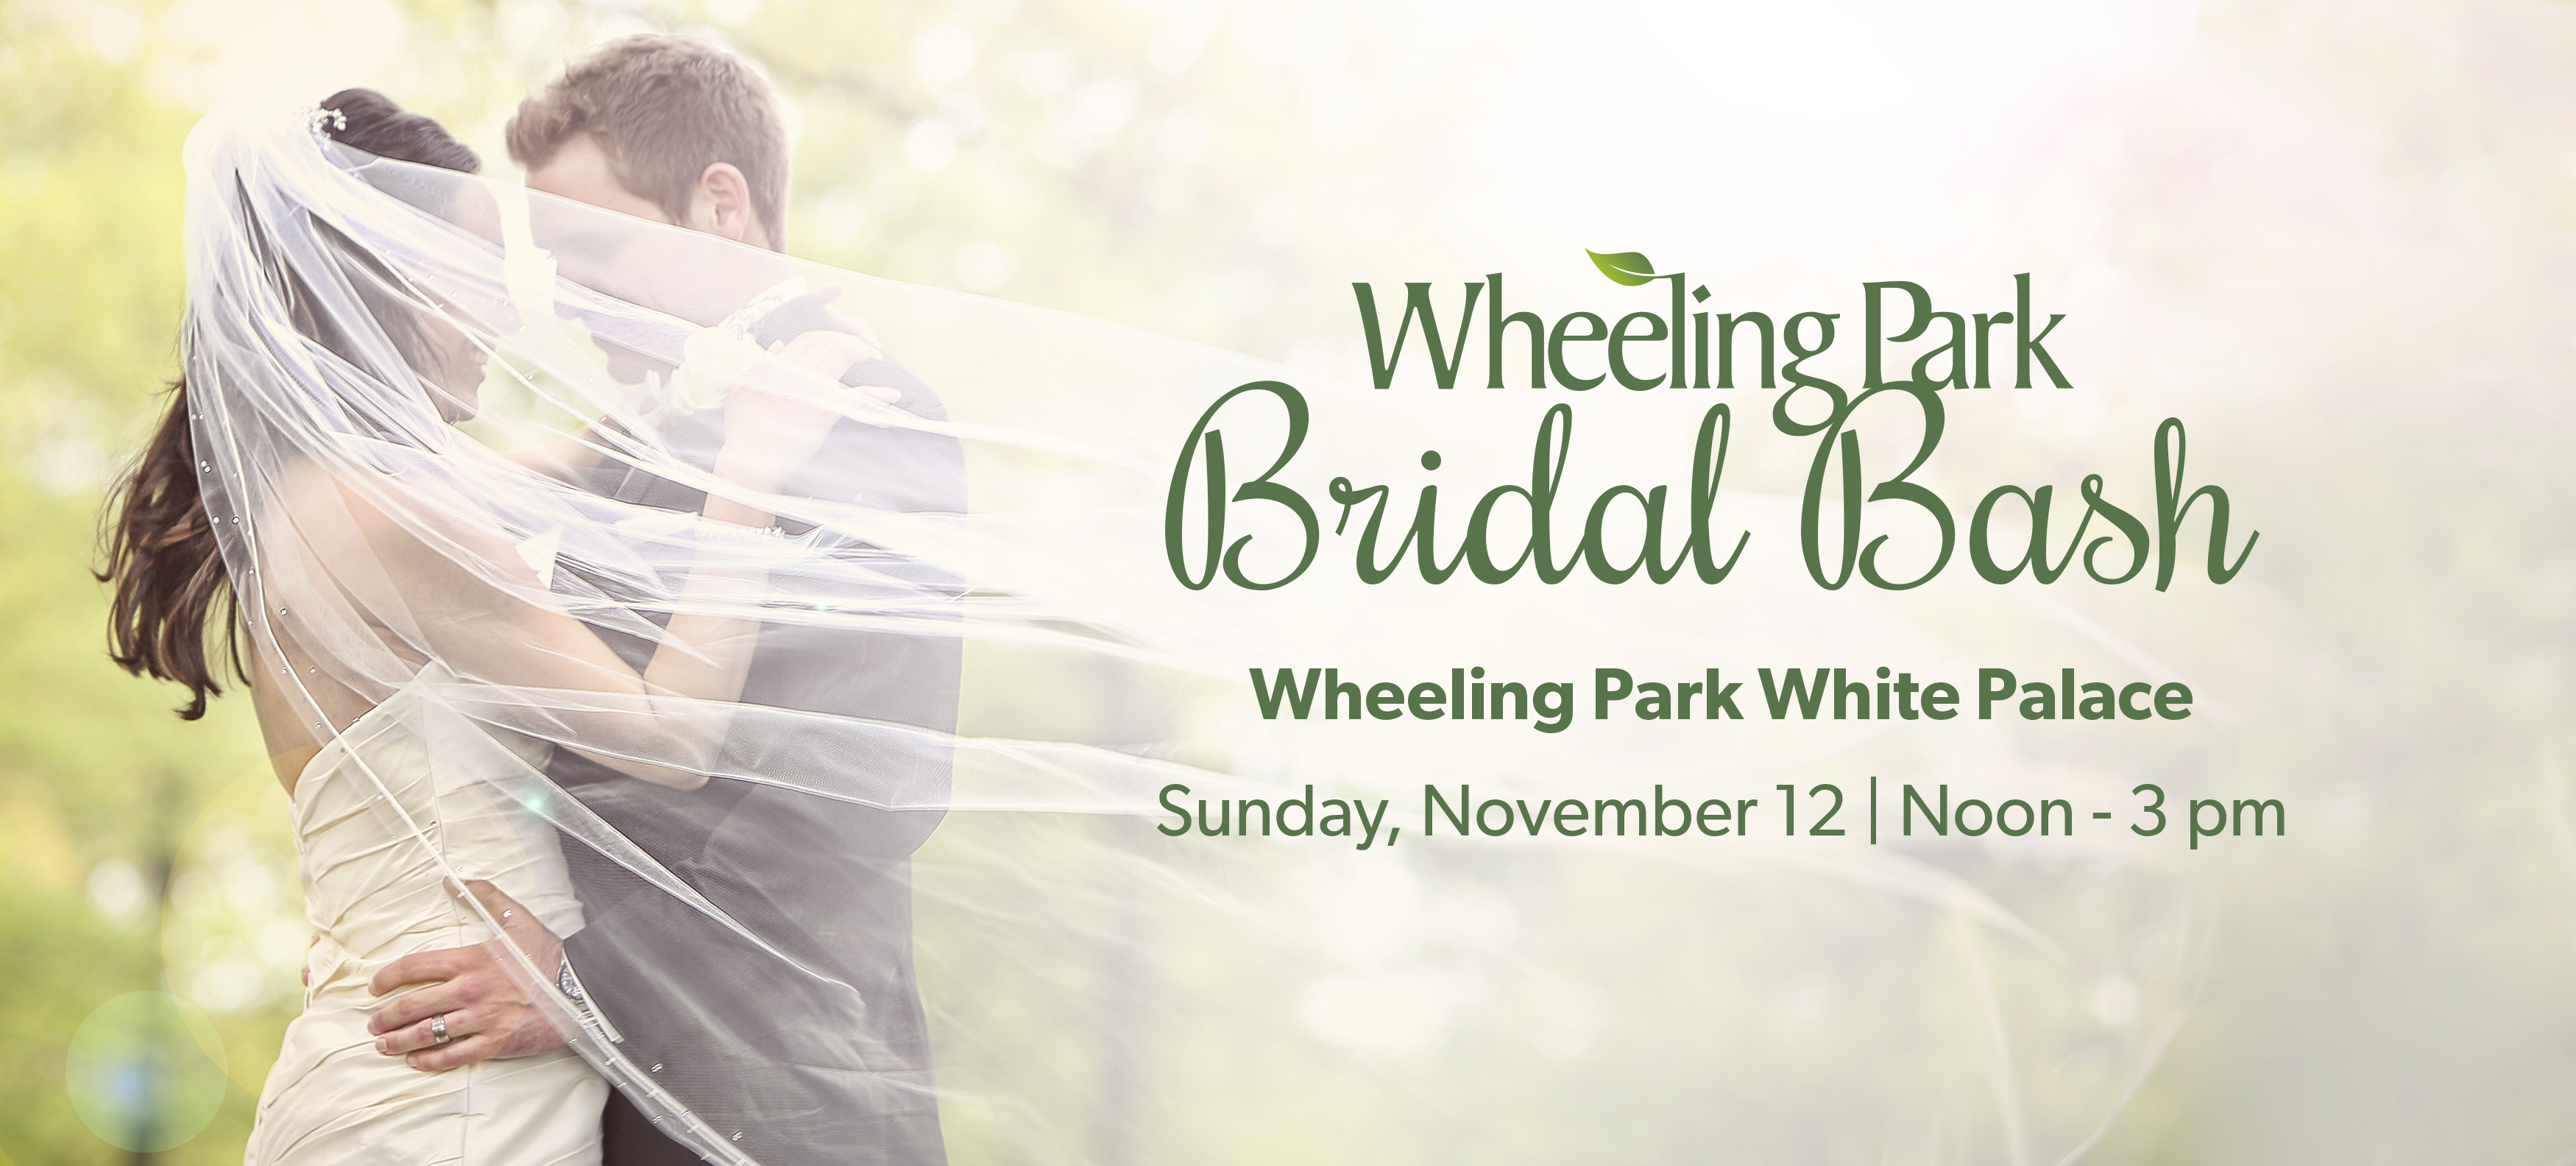 Wheeling Park Bridal Bash header photo